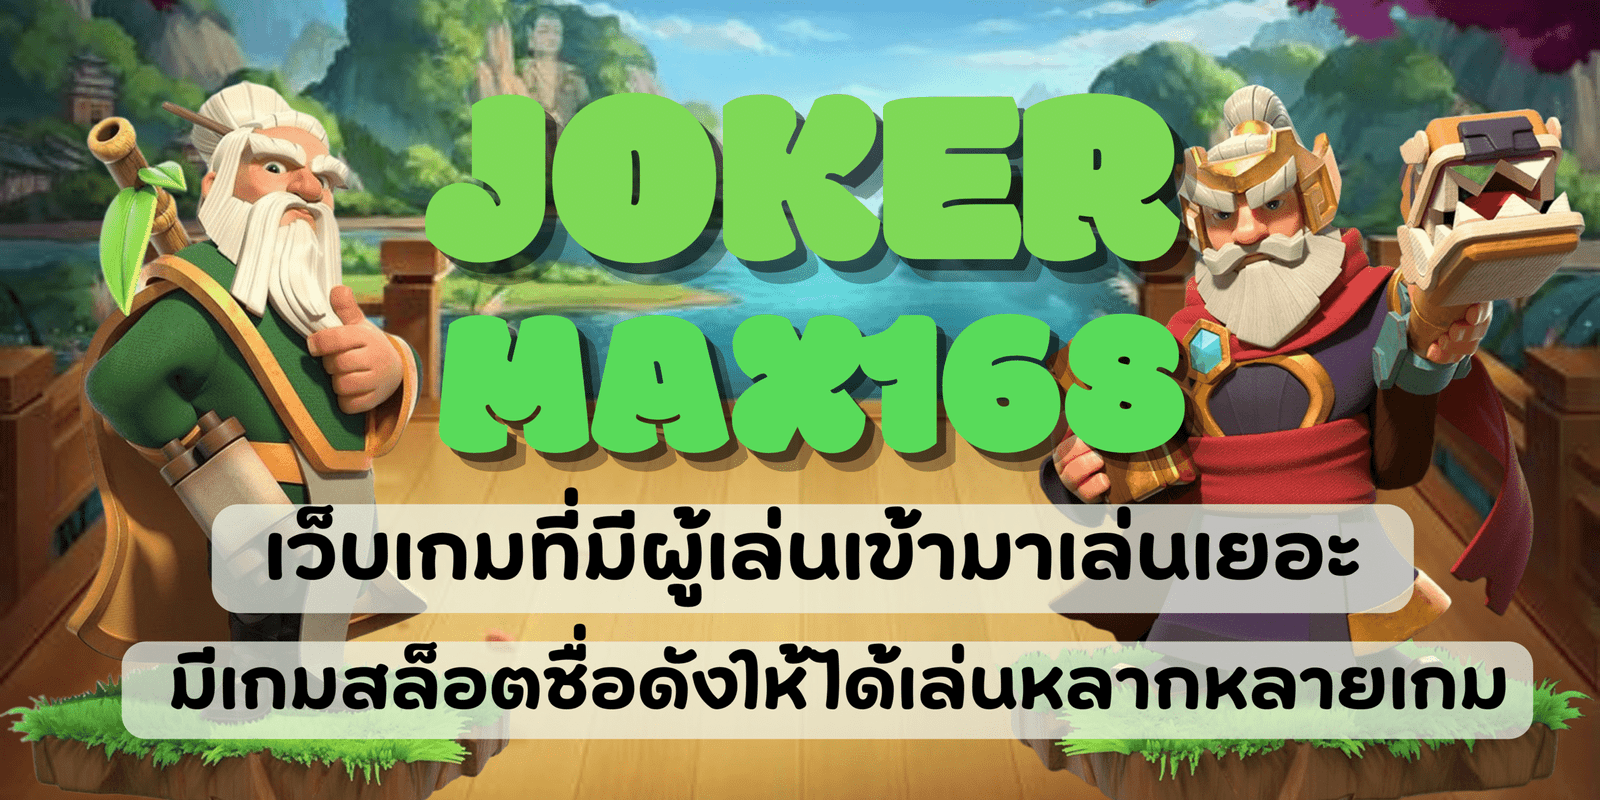 joker-max168-สมัครสมาชิก